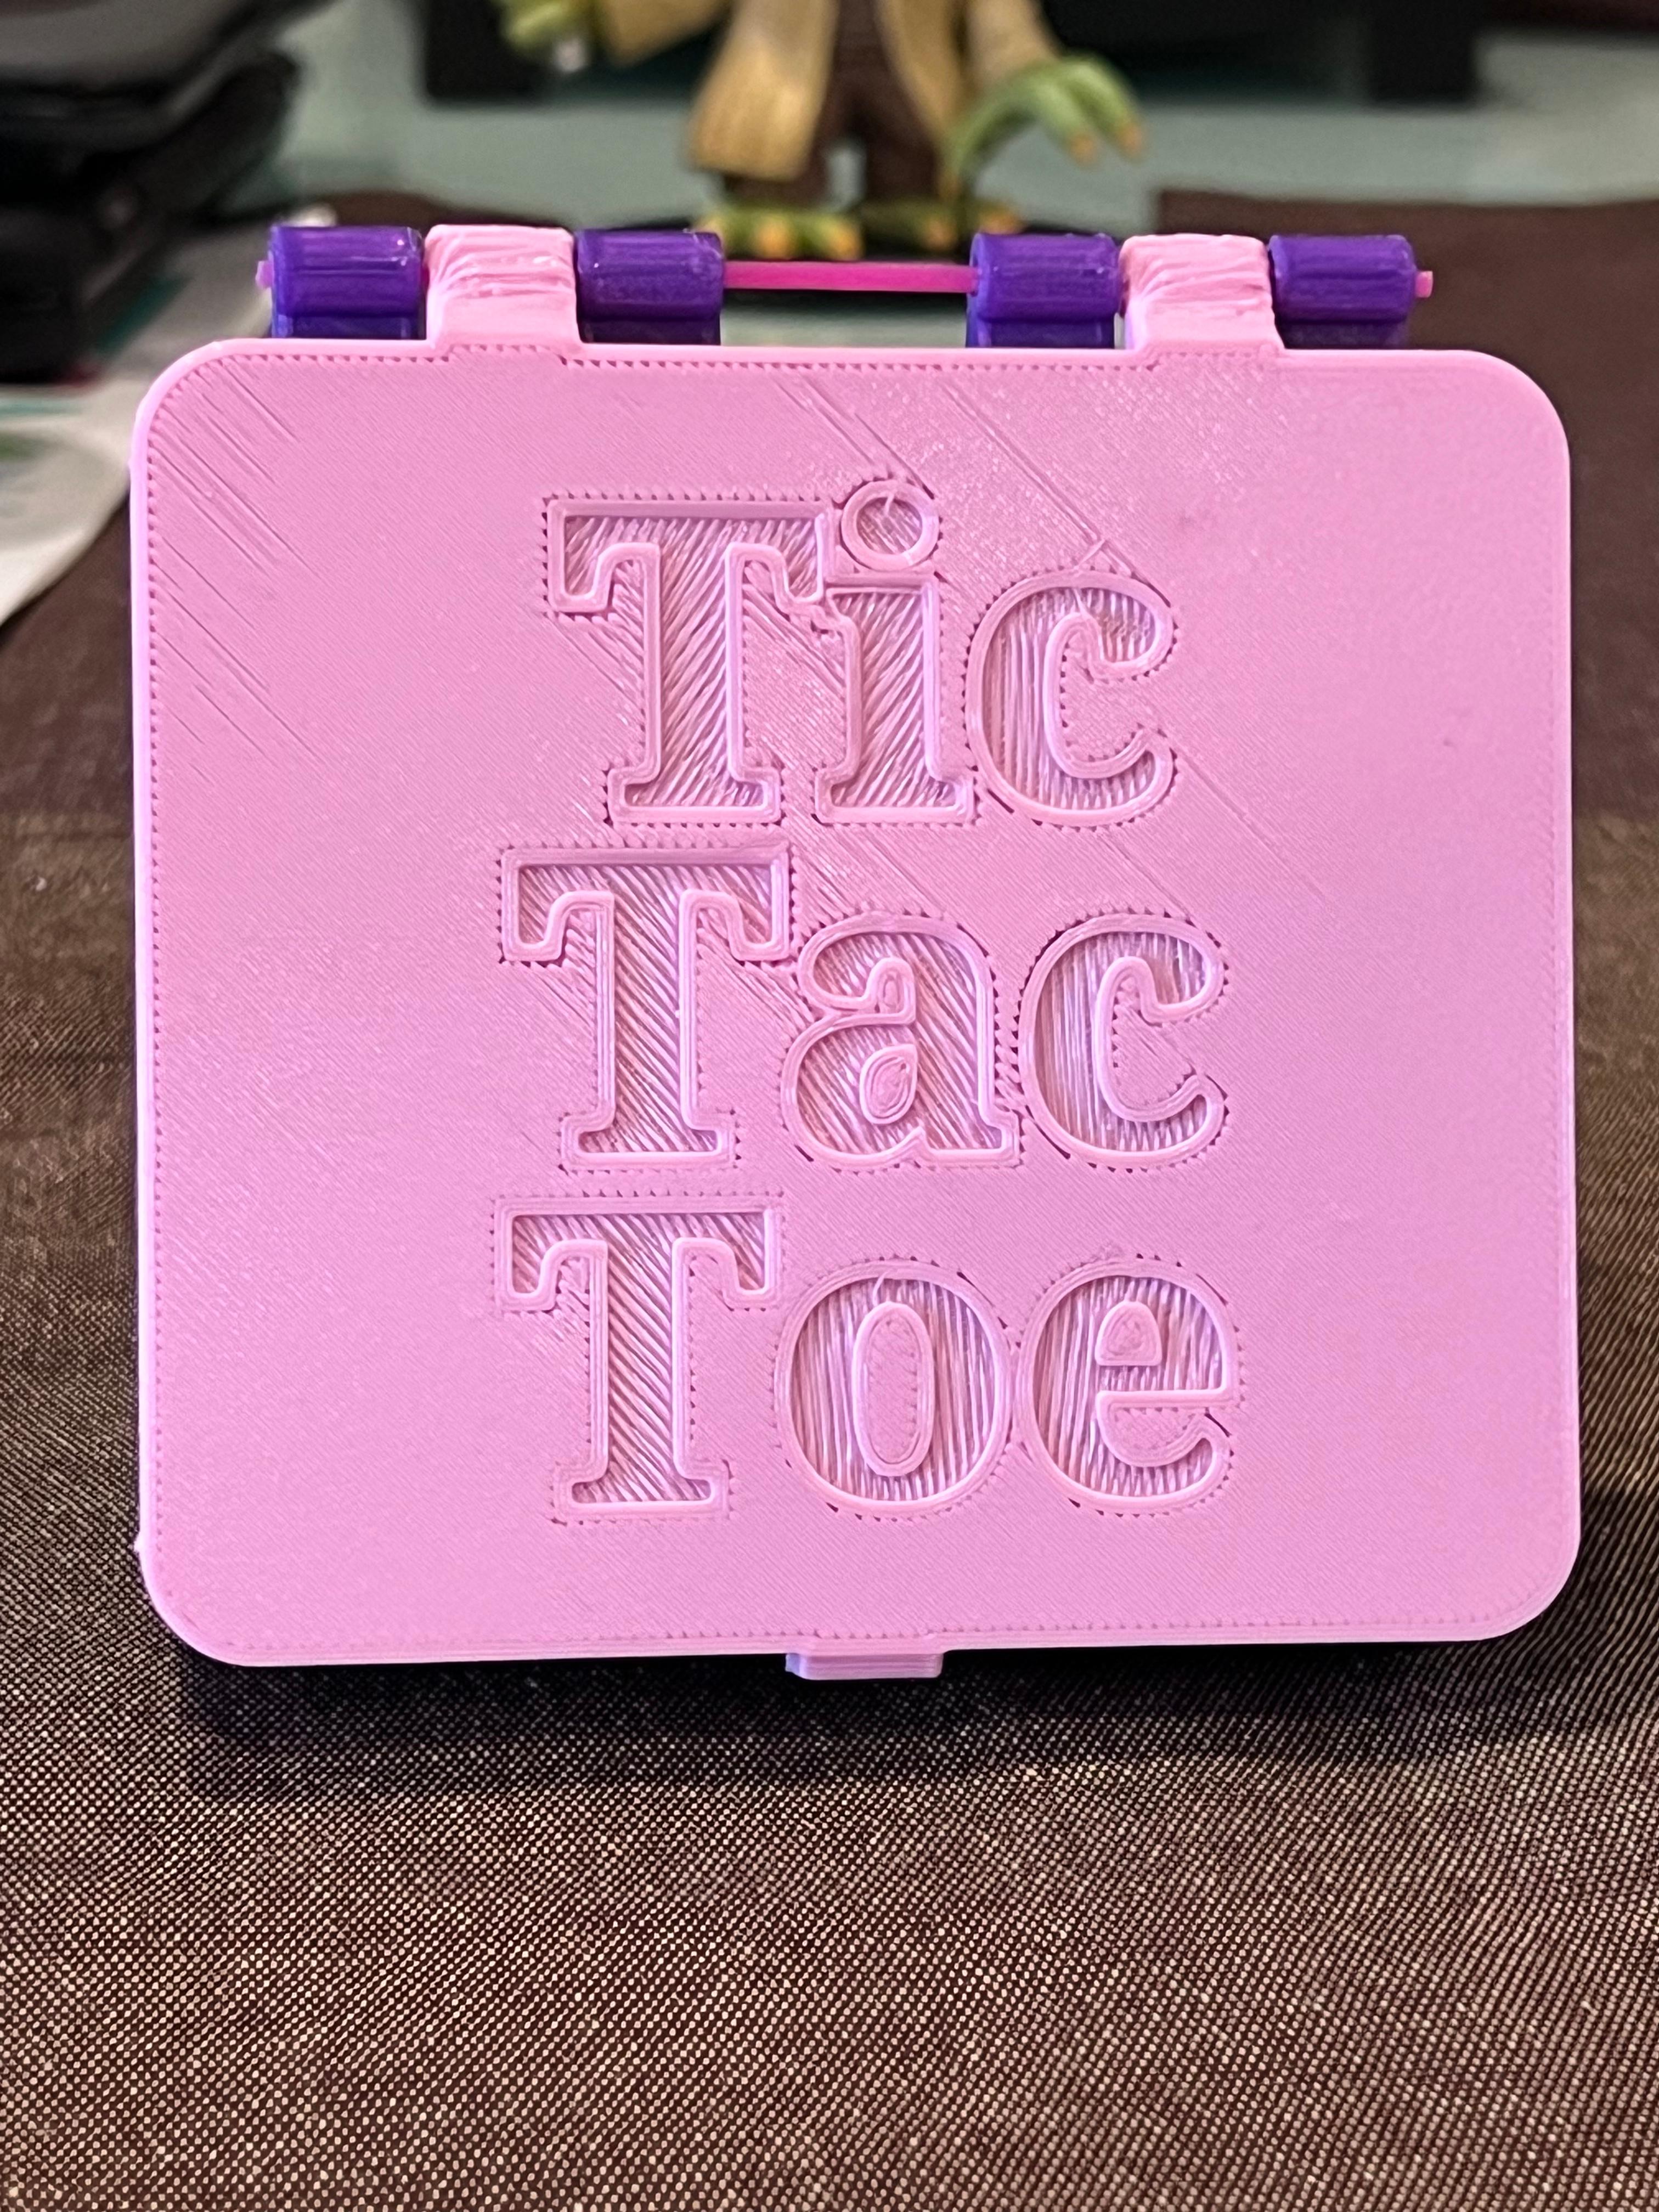 Tic Tac Toe in a box 3d model